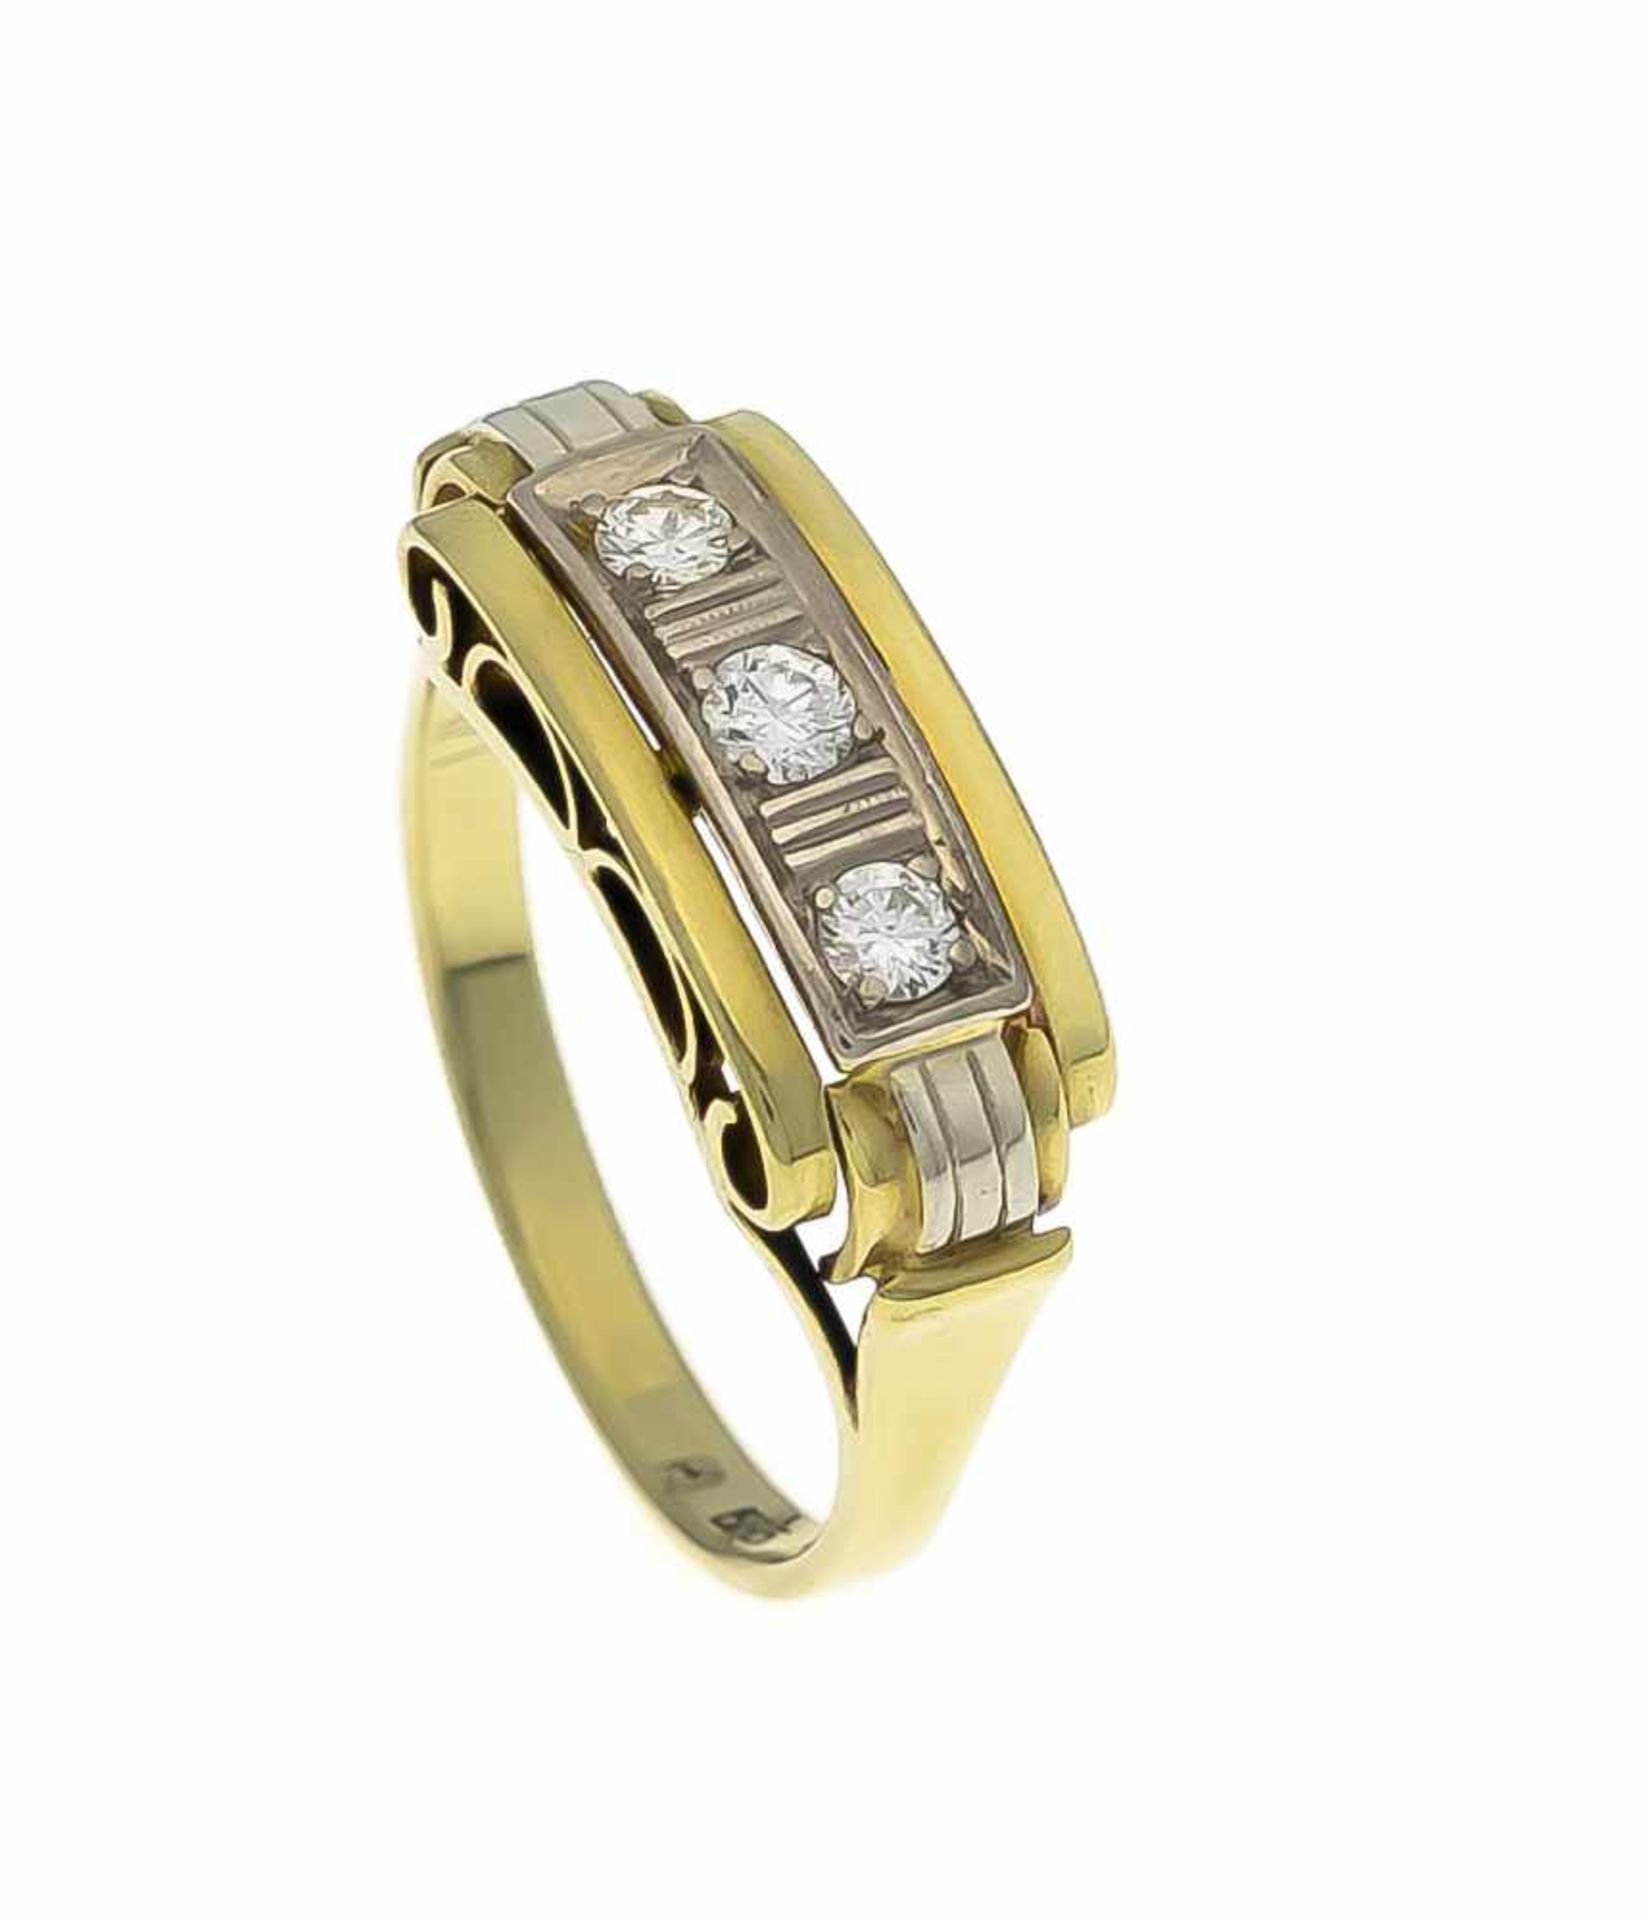 Brillant-Ring GG/WG 585/000 mit 3 Brillanten, zus. 0,22 ct W/SI, RG 55, 3,6 gBrilliant ring GG /